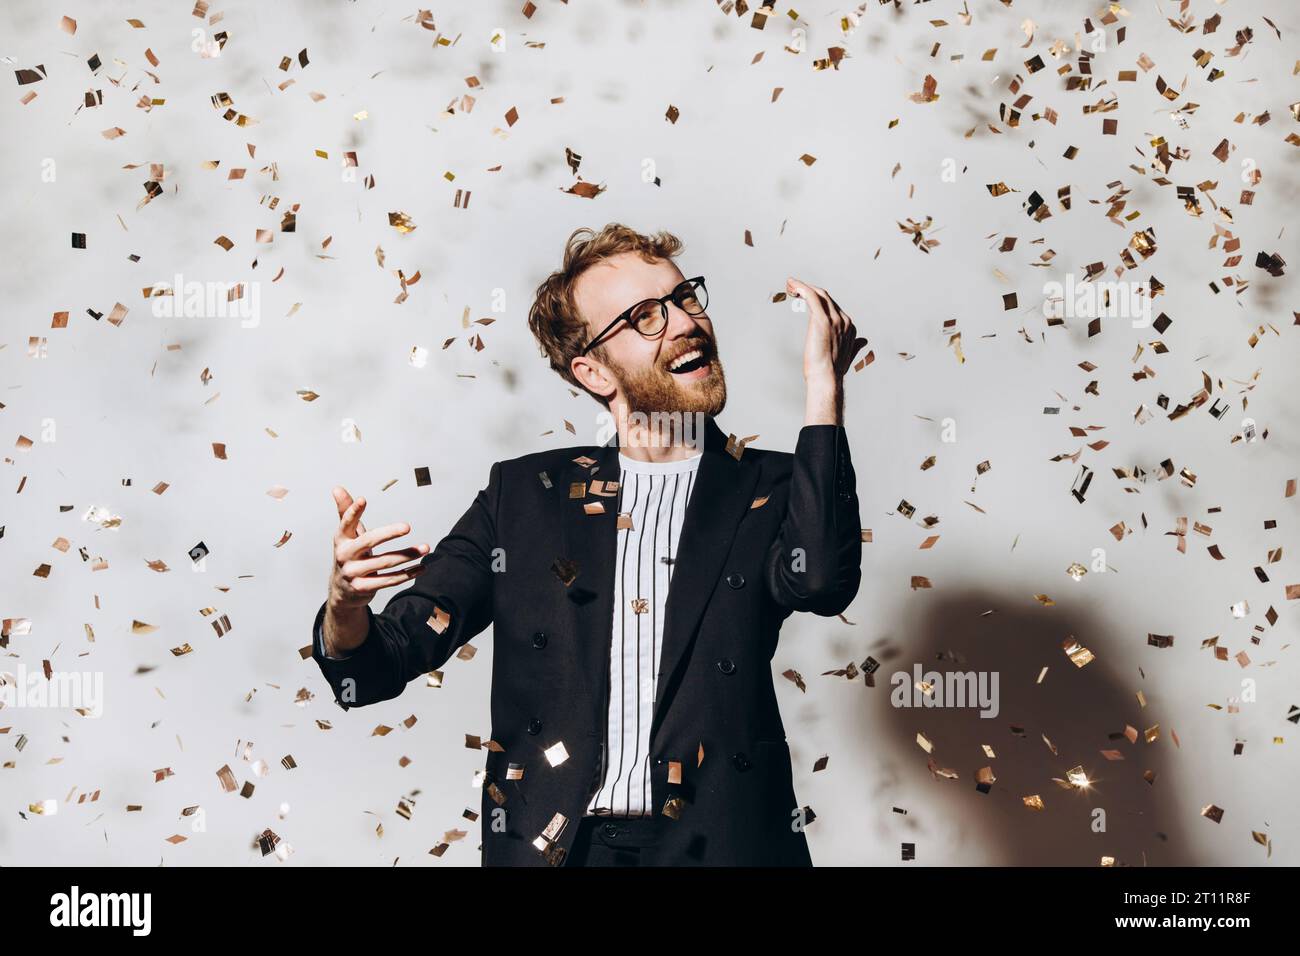 Celebration time. Portrait of a happy guy dancing under glittering confetti. Stock Photo